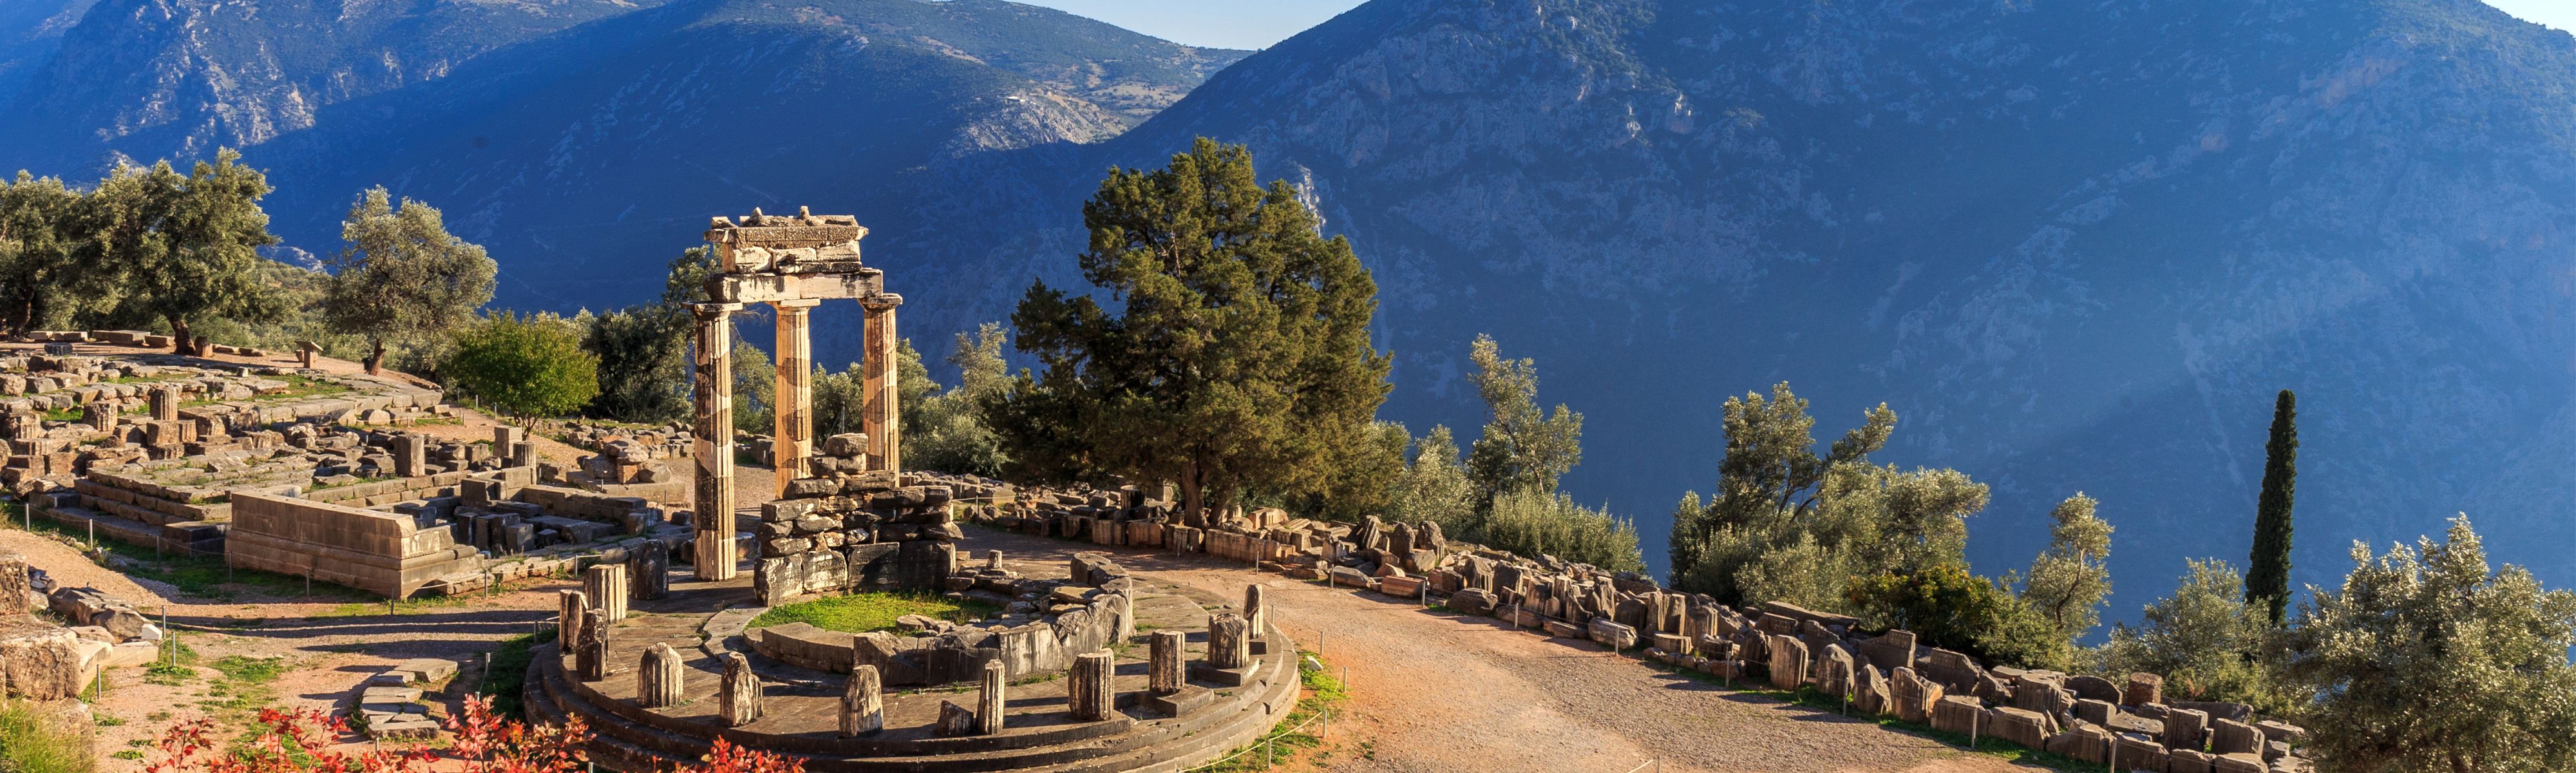 ruins of athina pronaia temple in ancient delphi